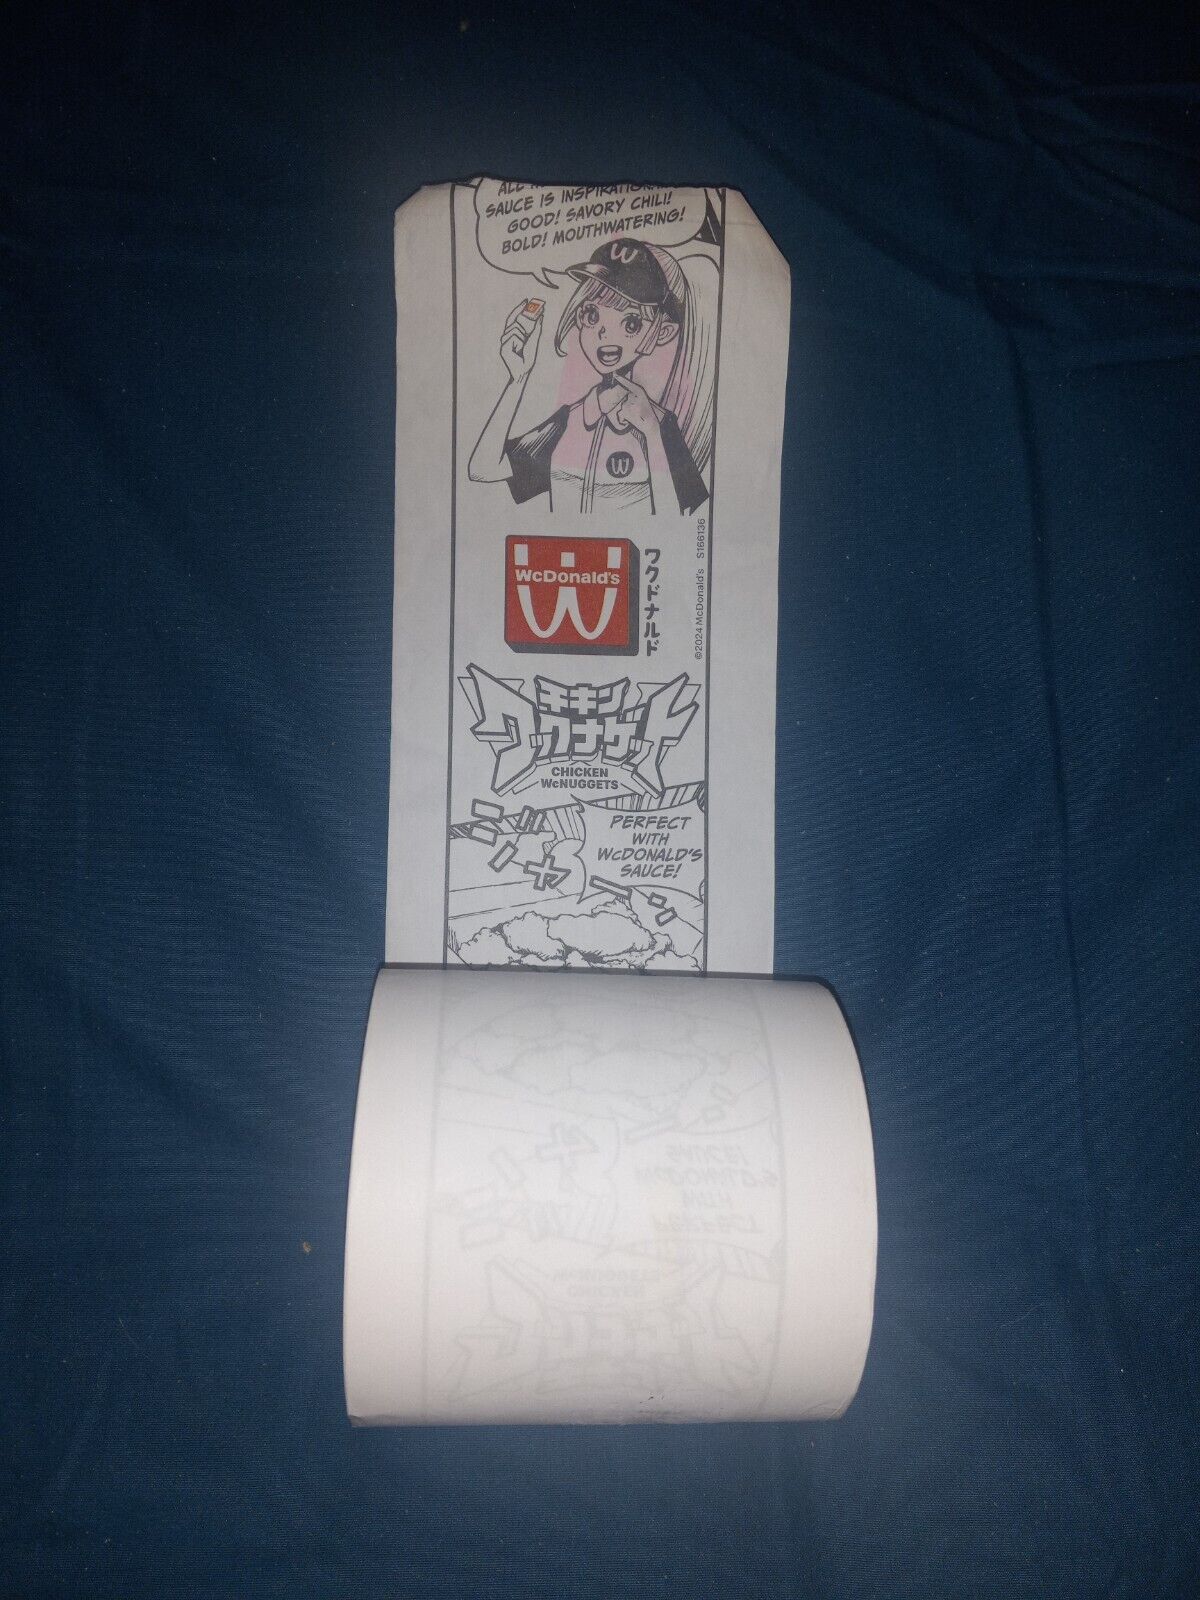 McDonald’s Wcdonalds Wcsauce Receipt Paper Roll Anime Collaboration